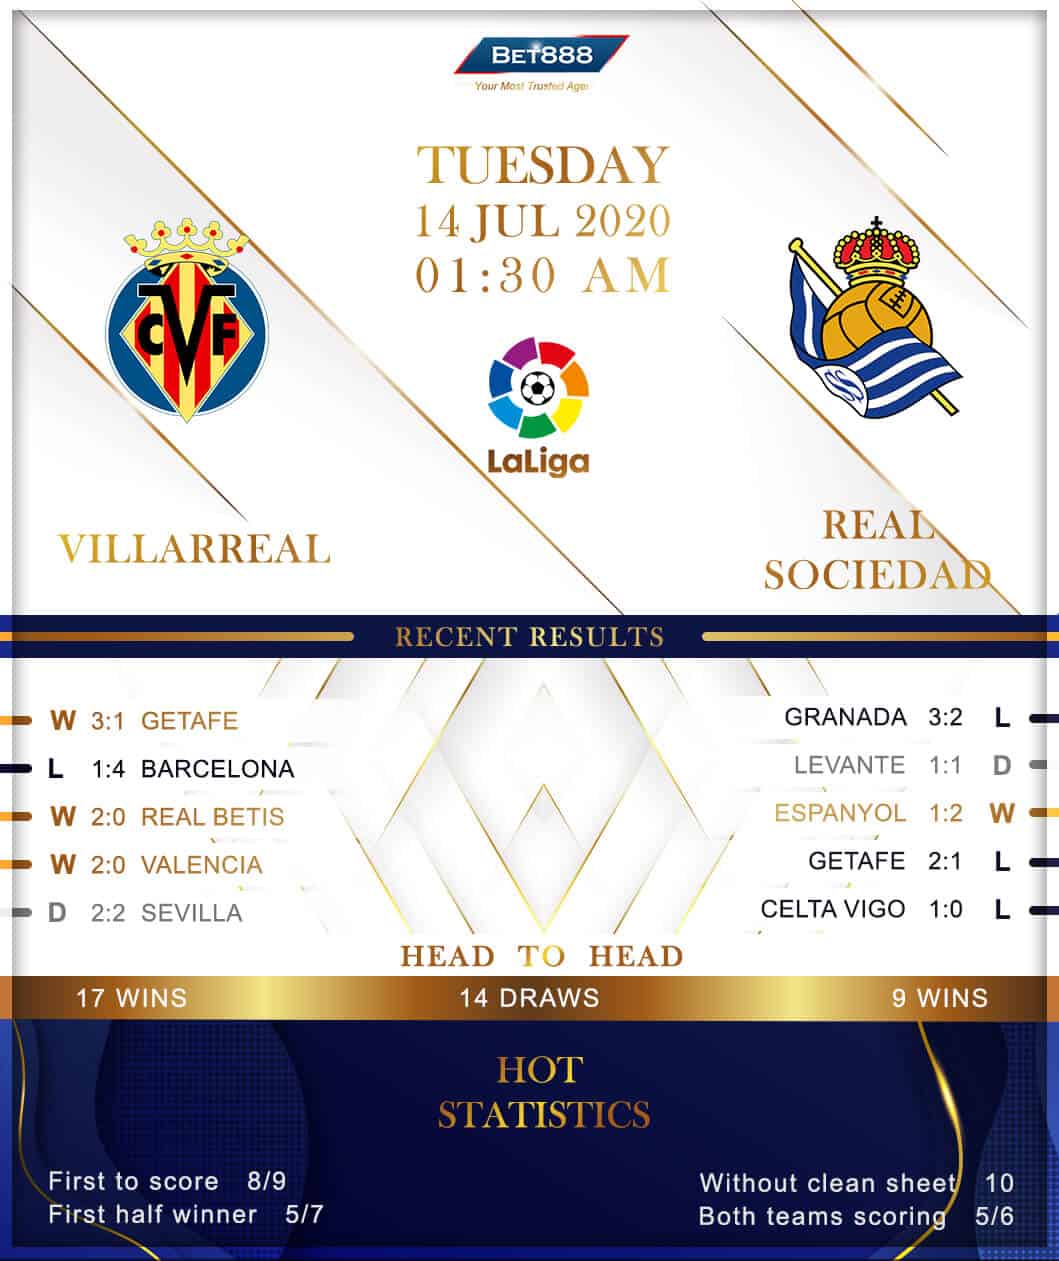 Villarreal vs Real Sociedad 14/07/20